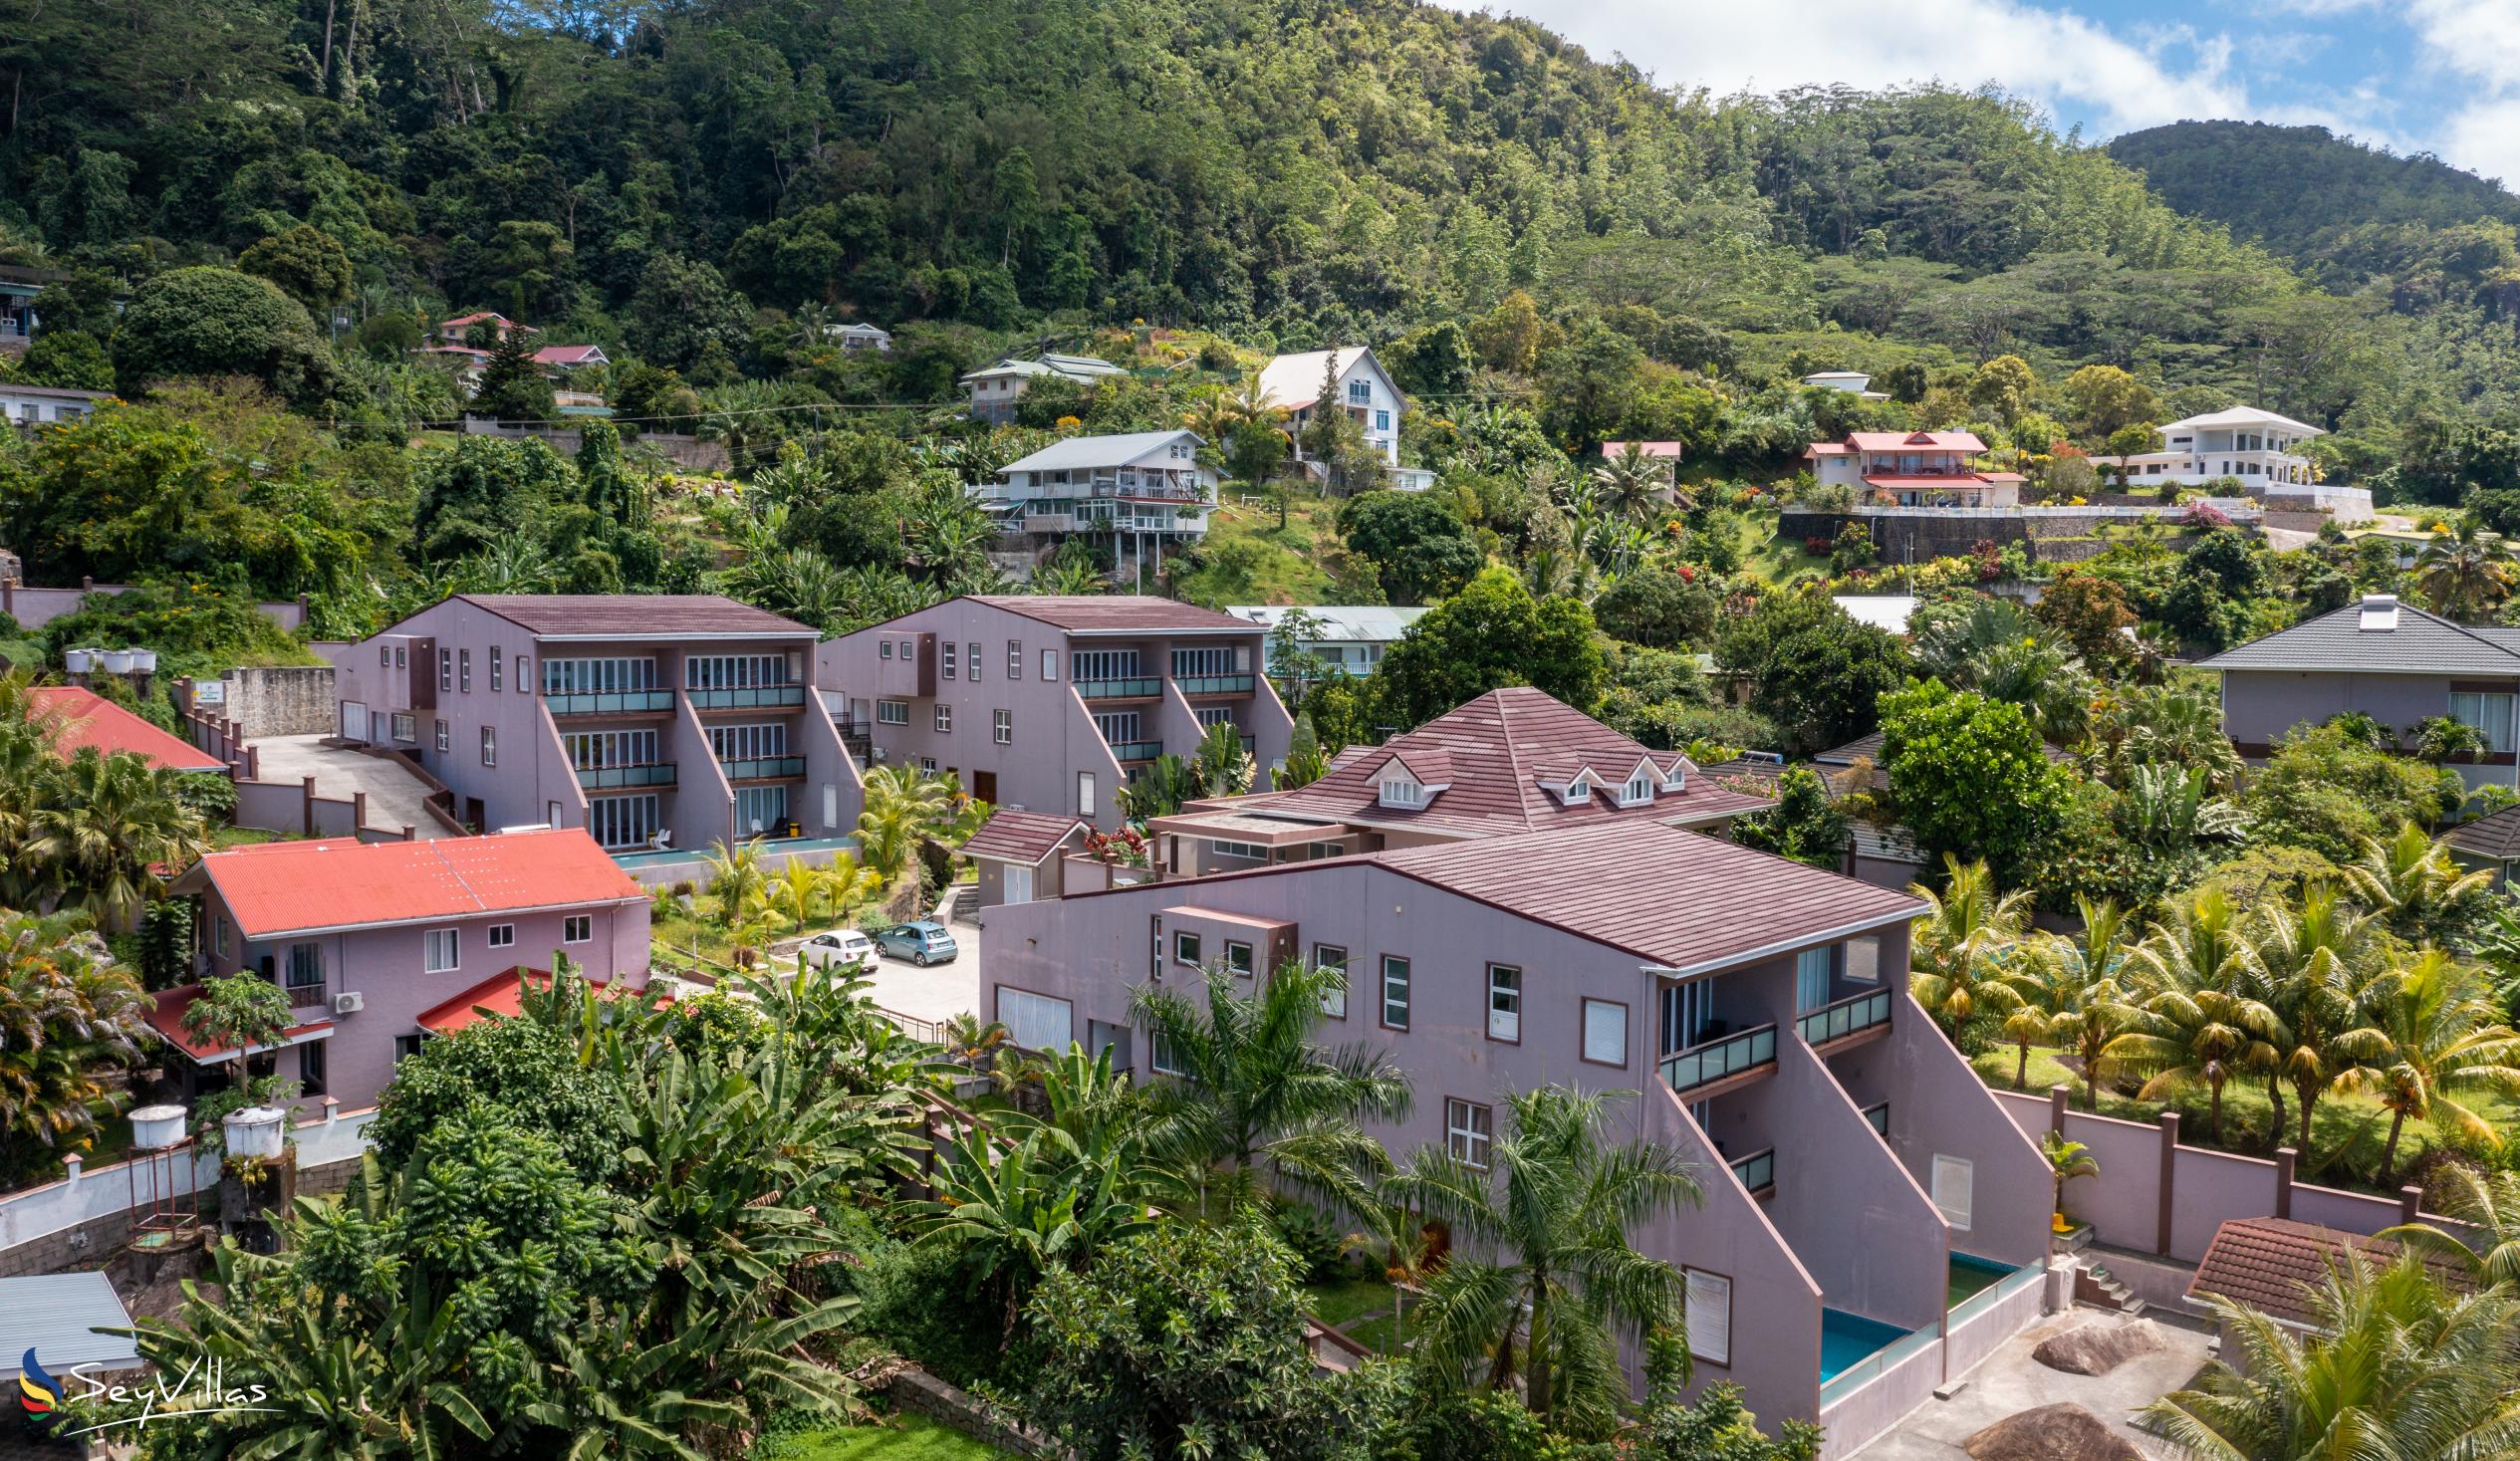 Foto 14: Cliffhanger Villas - Aussenbereich - Mahé (Seychellen)